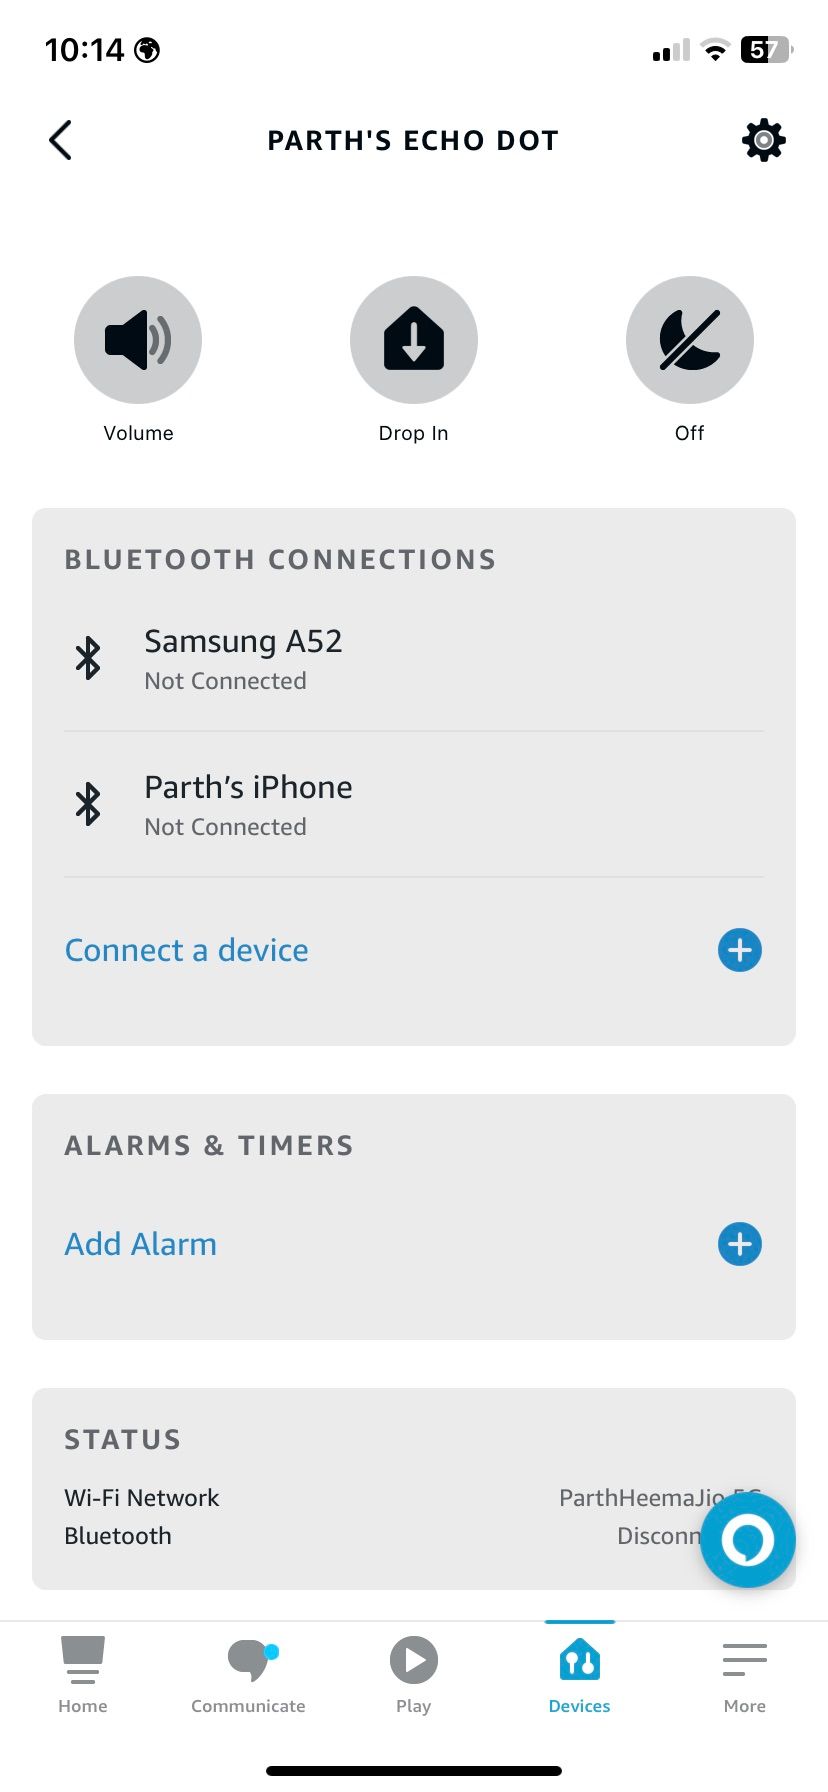 A screenshot of the Amazon Alexa Echo device settings page.